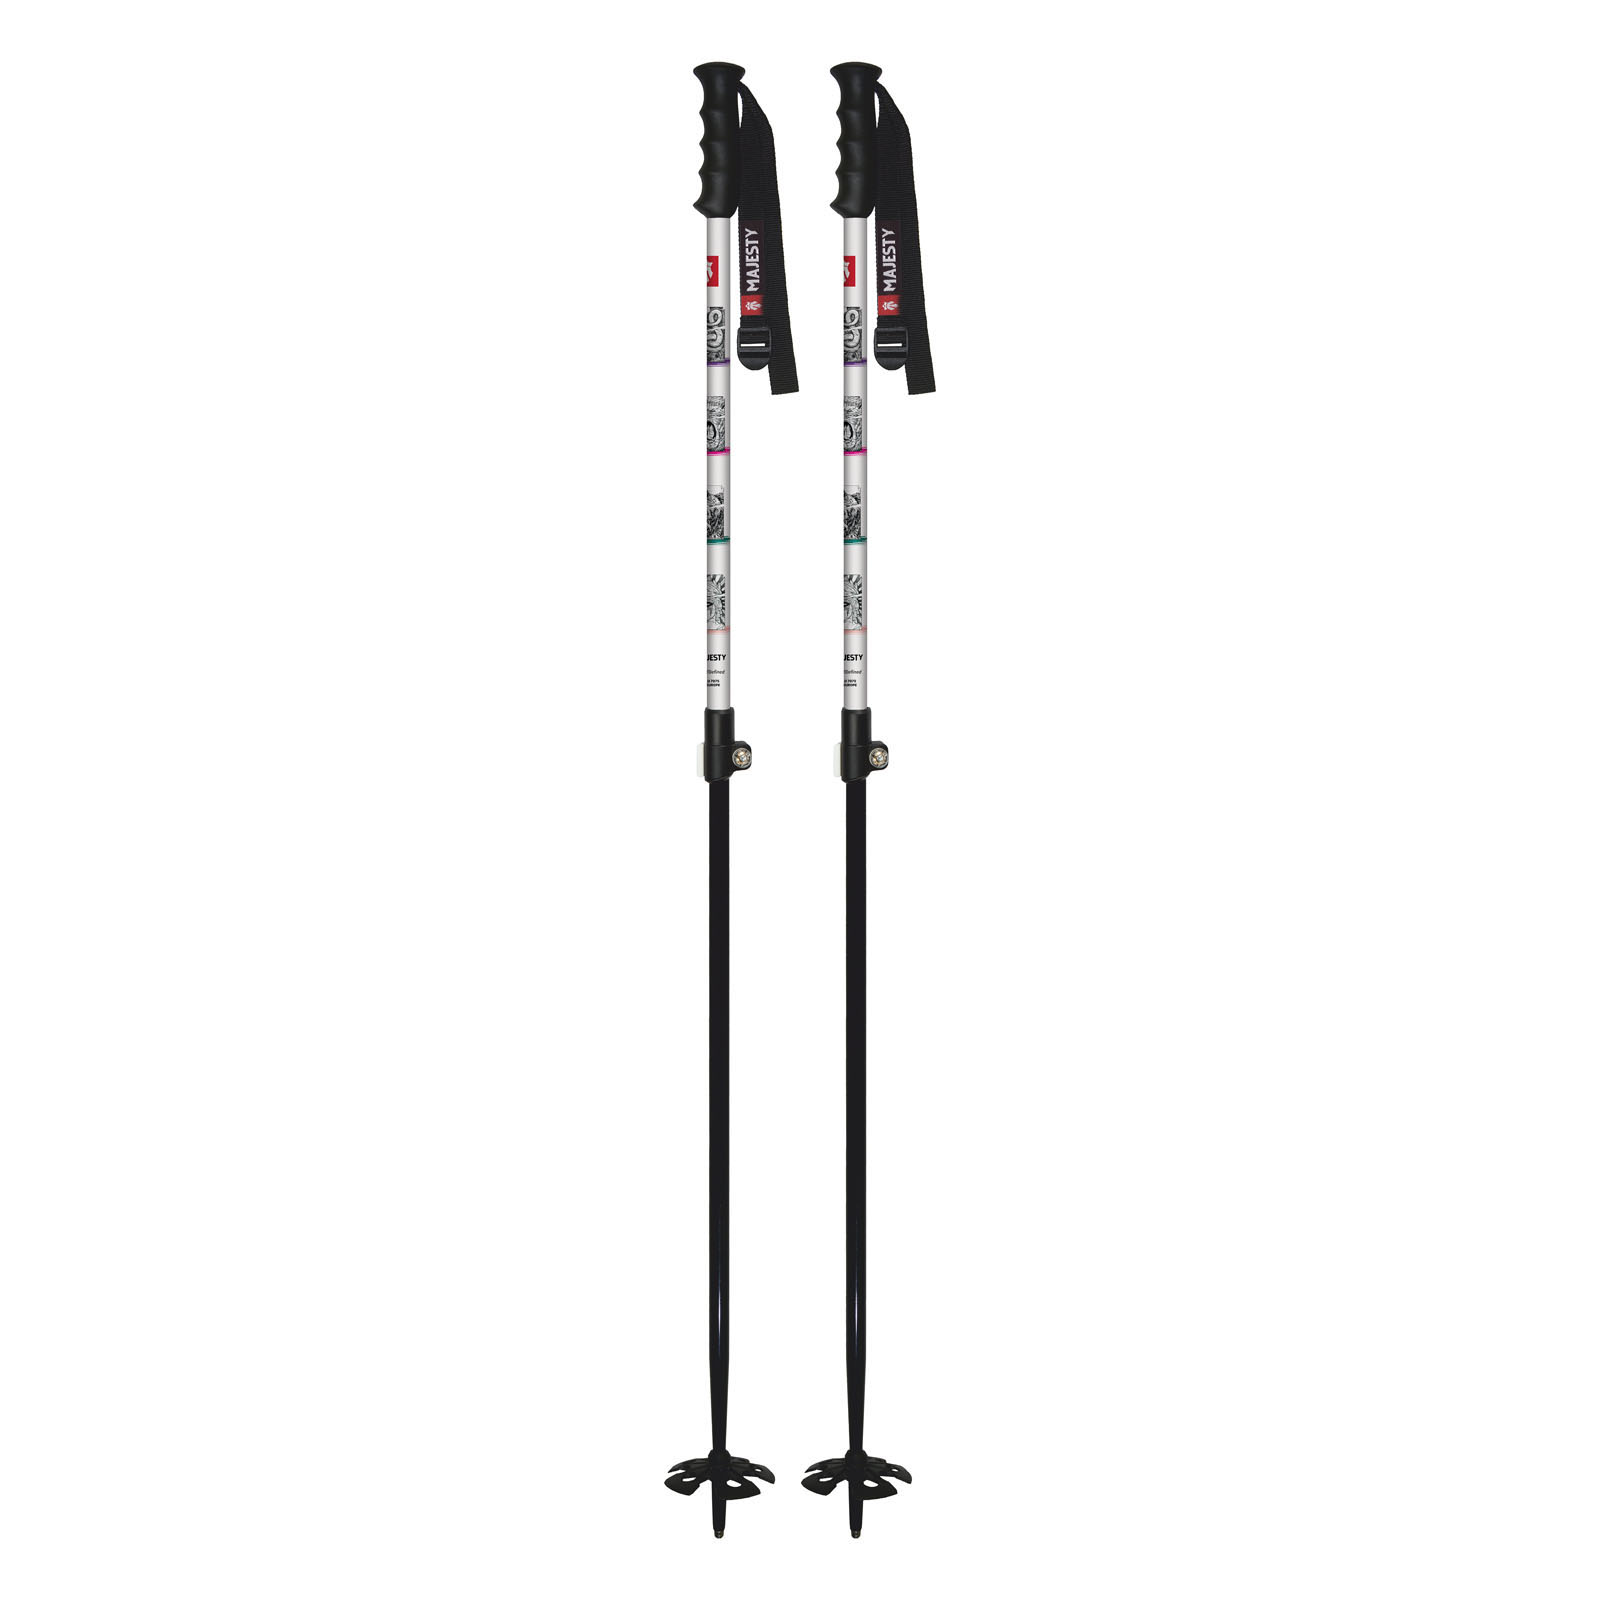 MAJESTY Freestyle Telescopic ski poles - MAJESTY SKIS - Skis Online -  Official MAJESTY Store